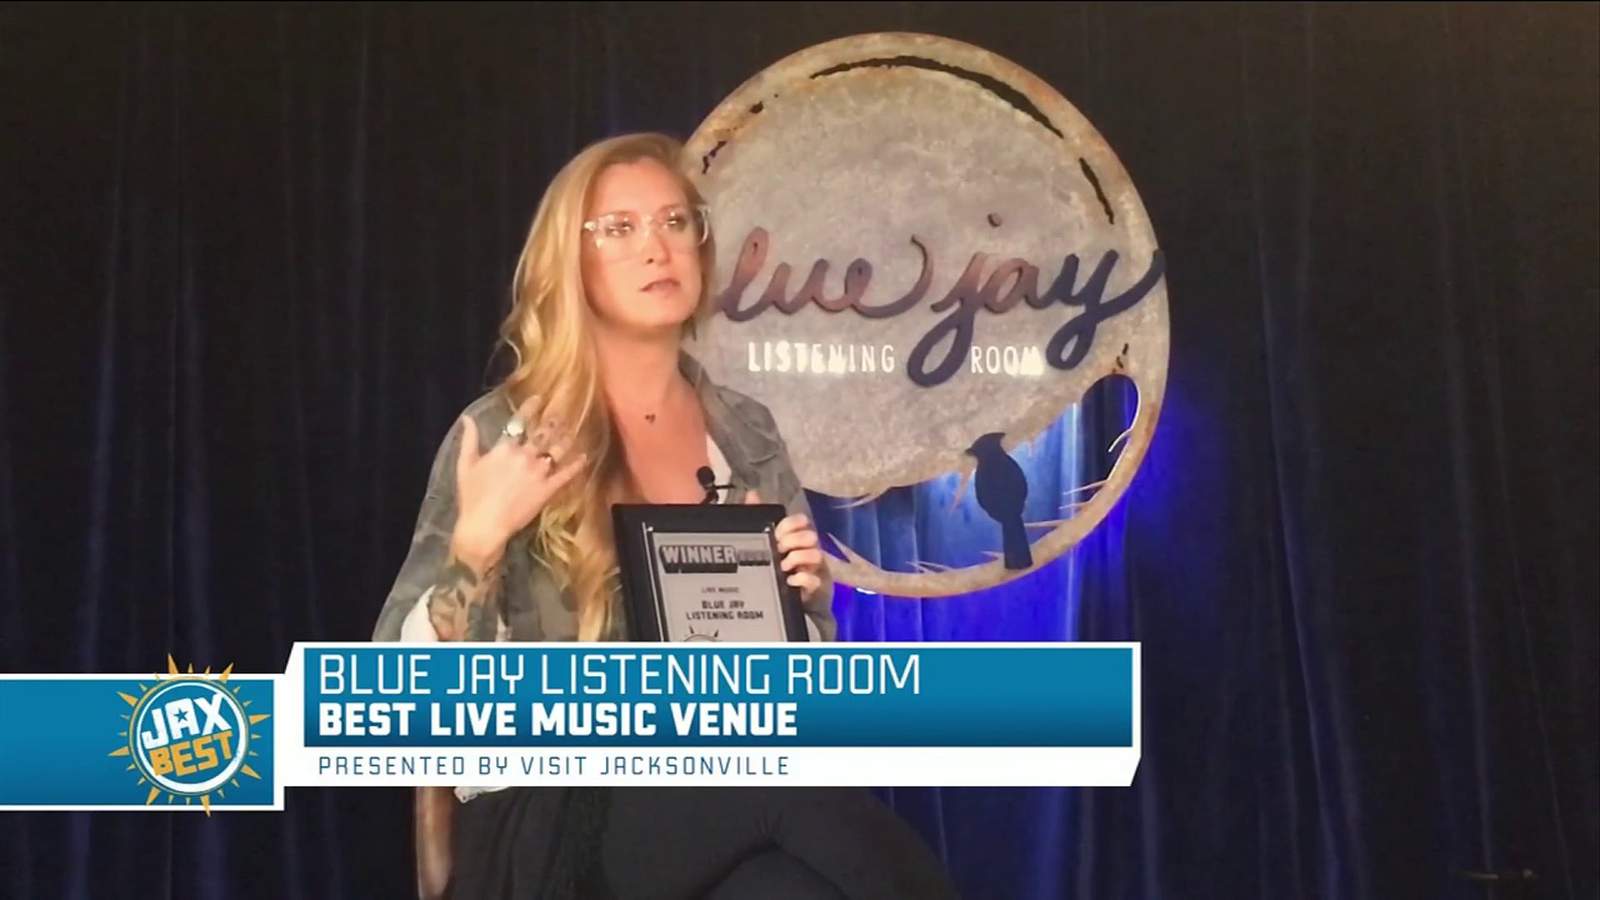 Jax Best Live Music Venue: Blue Jay Listening Room | River City Live